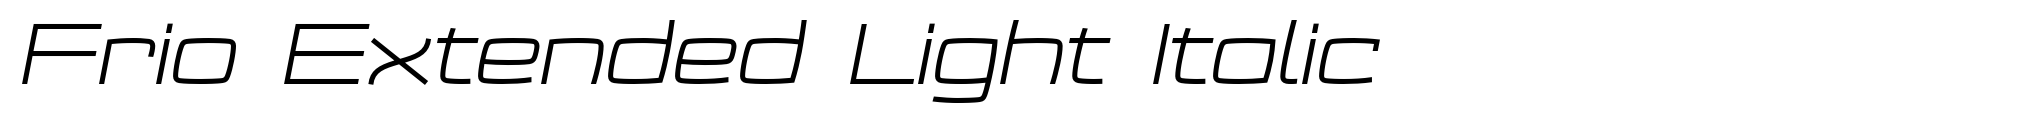 Frio Extended Light Italic image